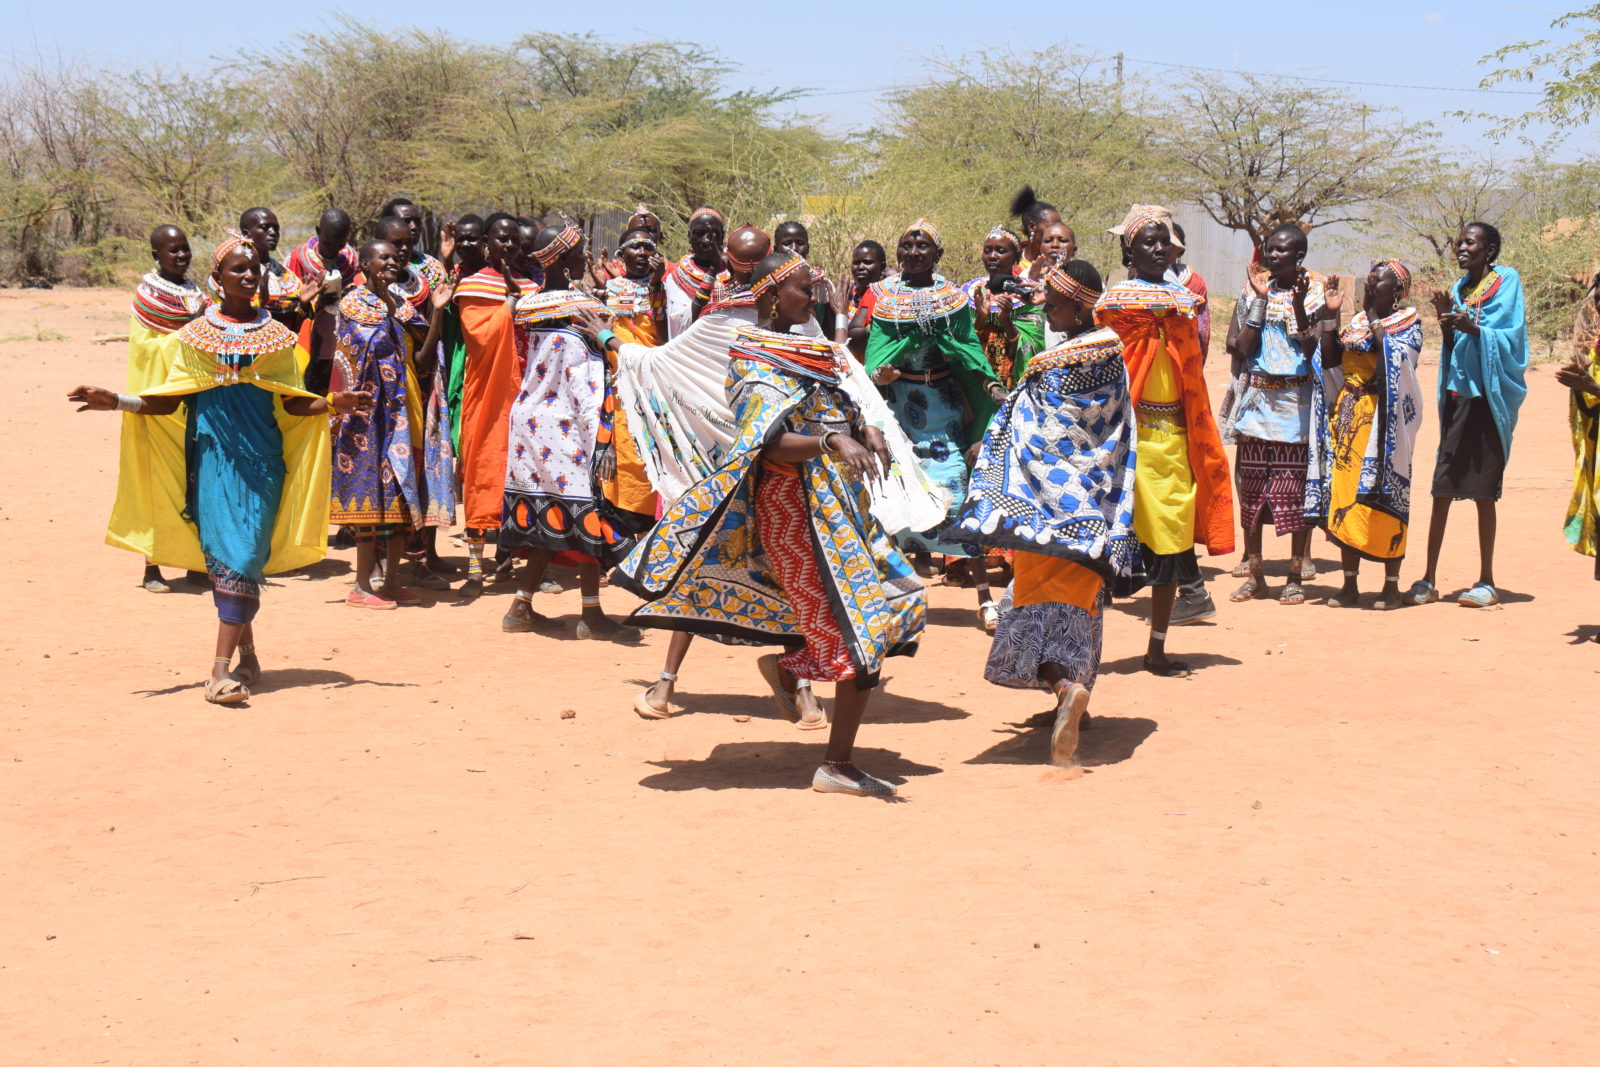 Women dance together at the Umoja Village women's refuge in northern Kenya.